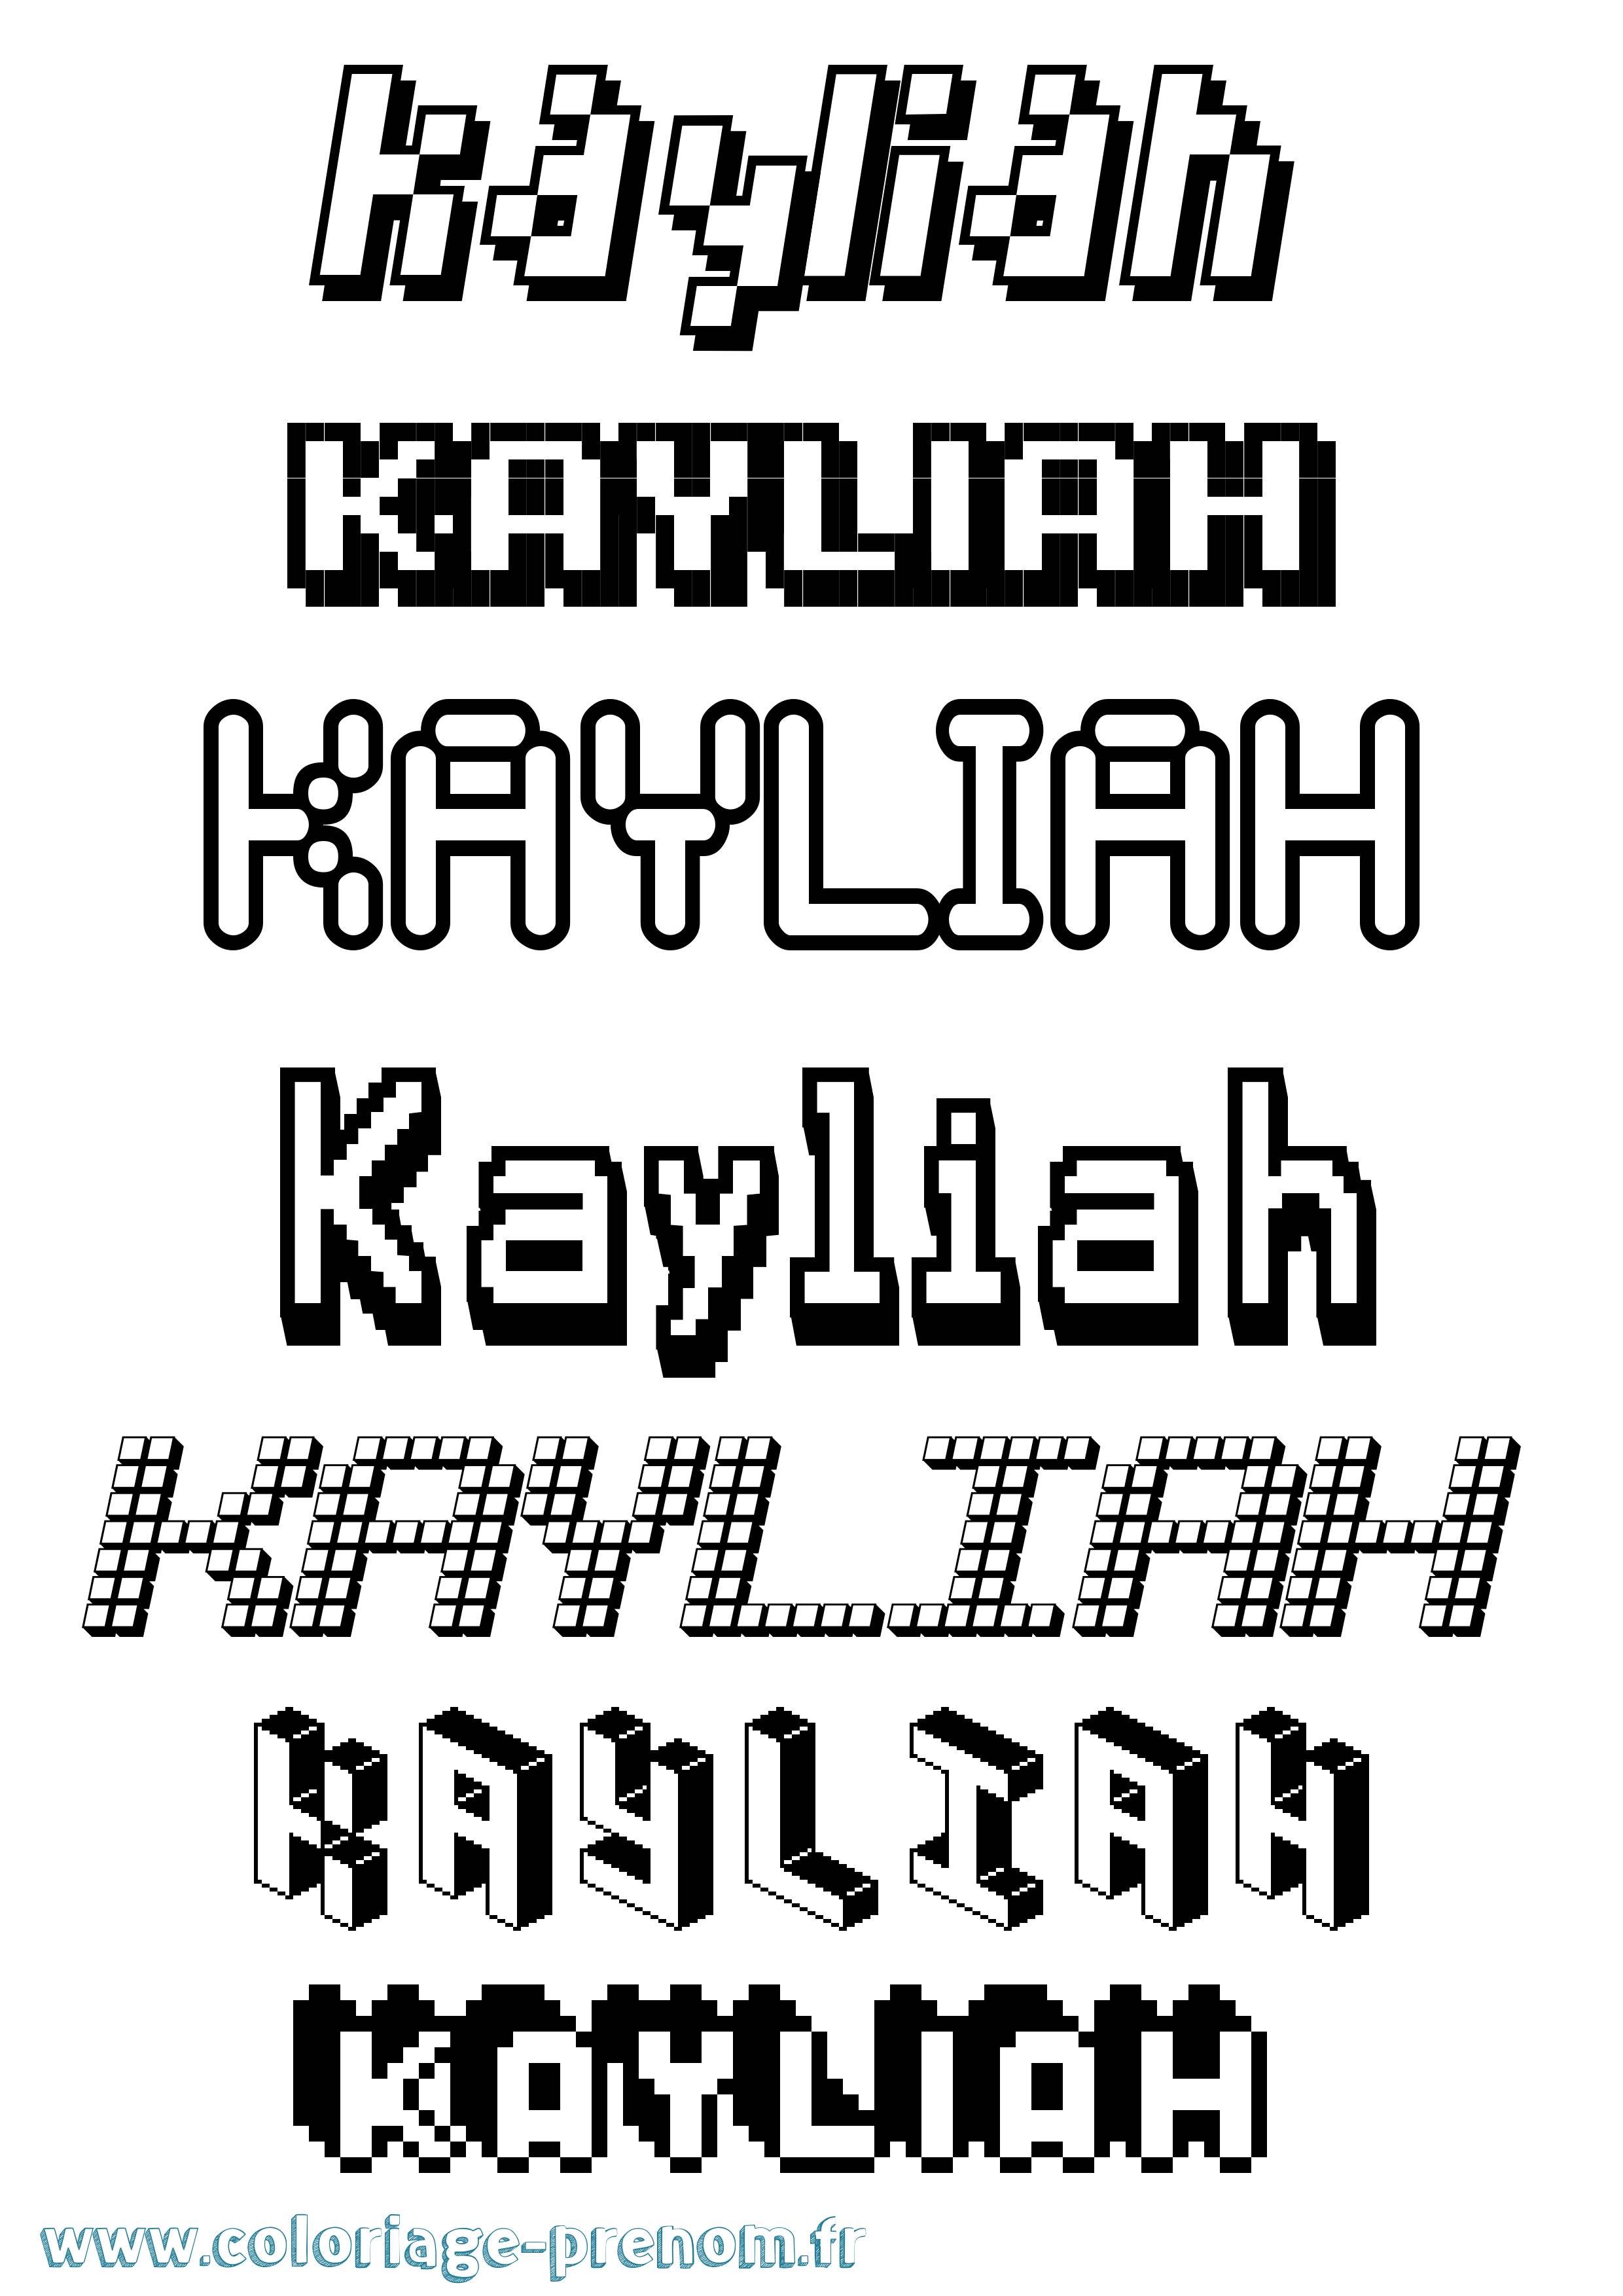 Coloriage prénom Kayliah Pixel